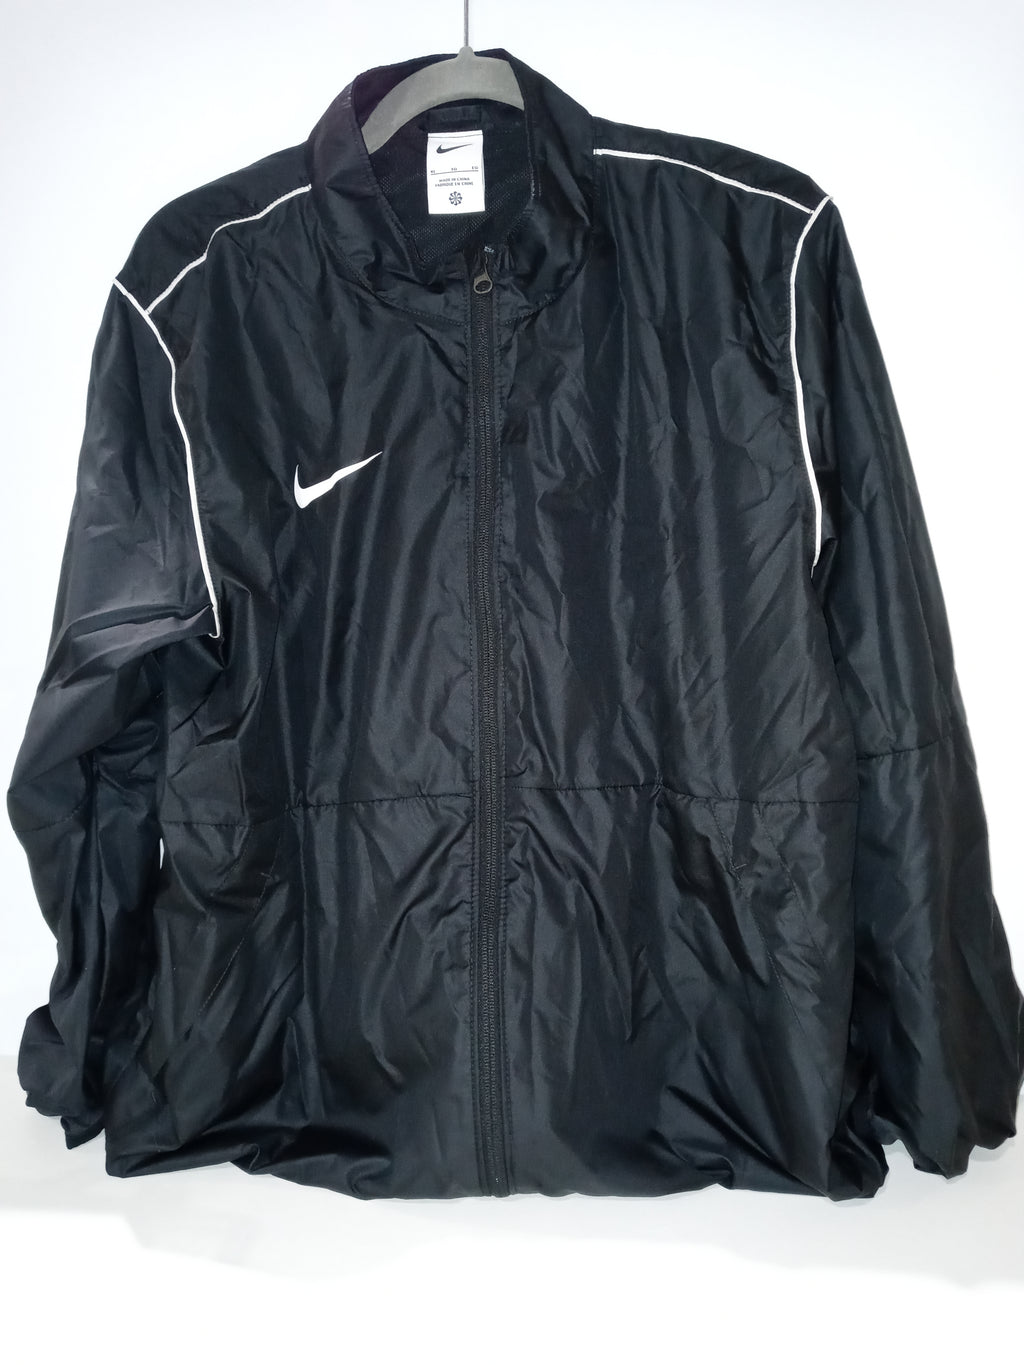 Veeg Notitie olifant Nike Men's Park 20 Rain Jacket, BV6881-010 (Black/White, X-Large)